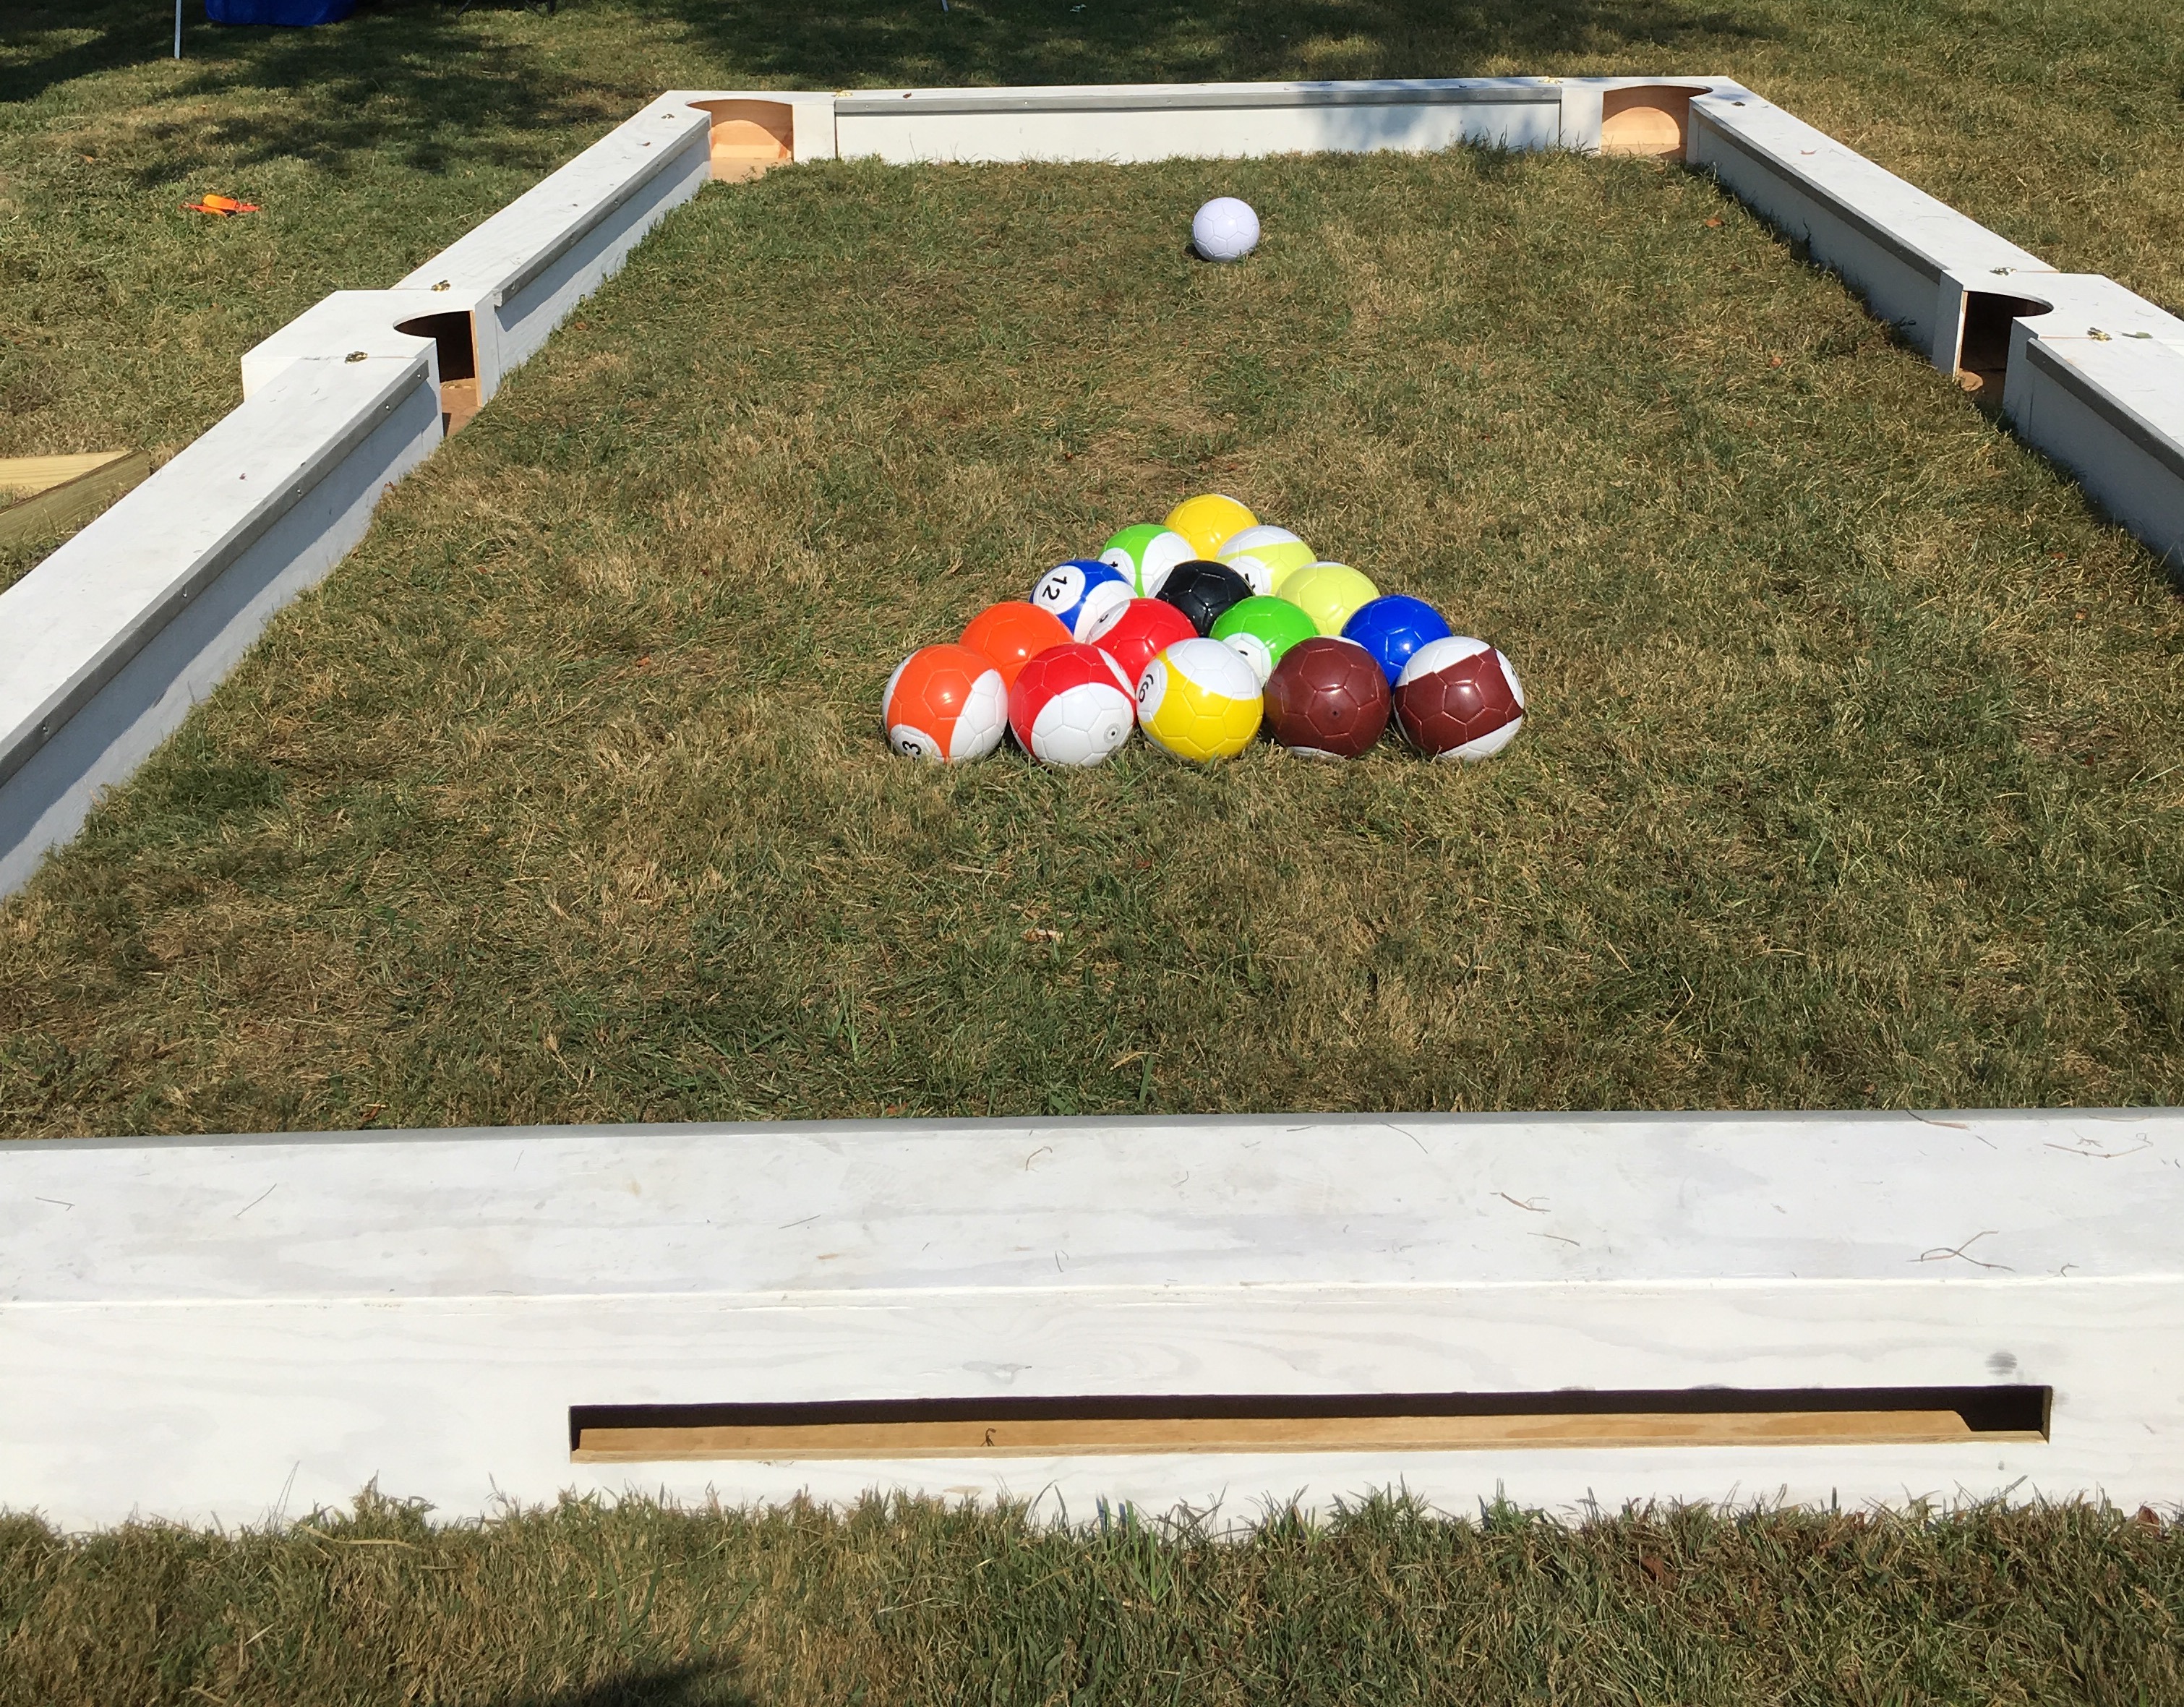 Soccer billiards set up on grass